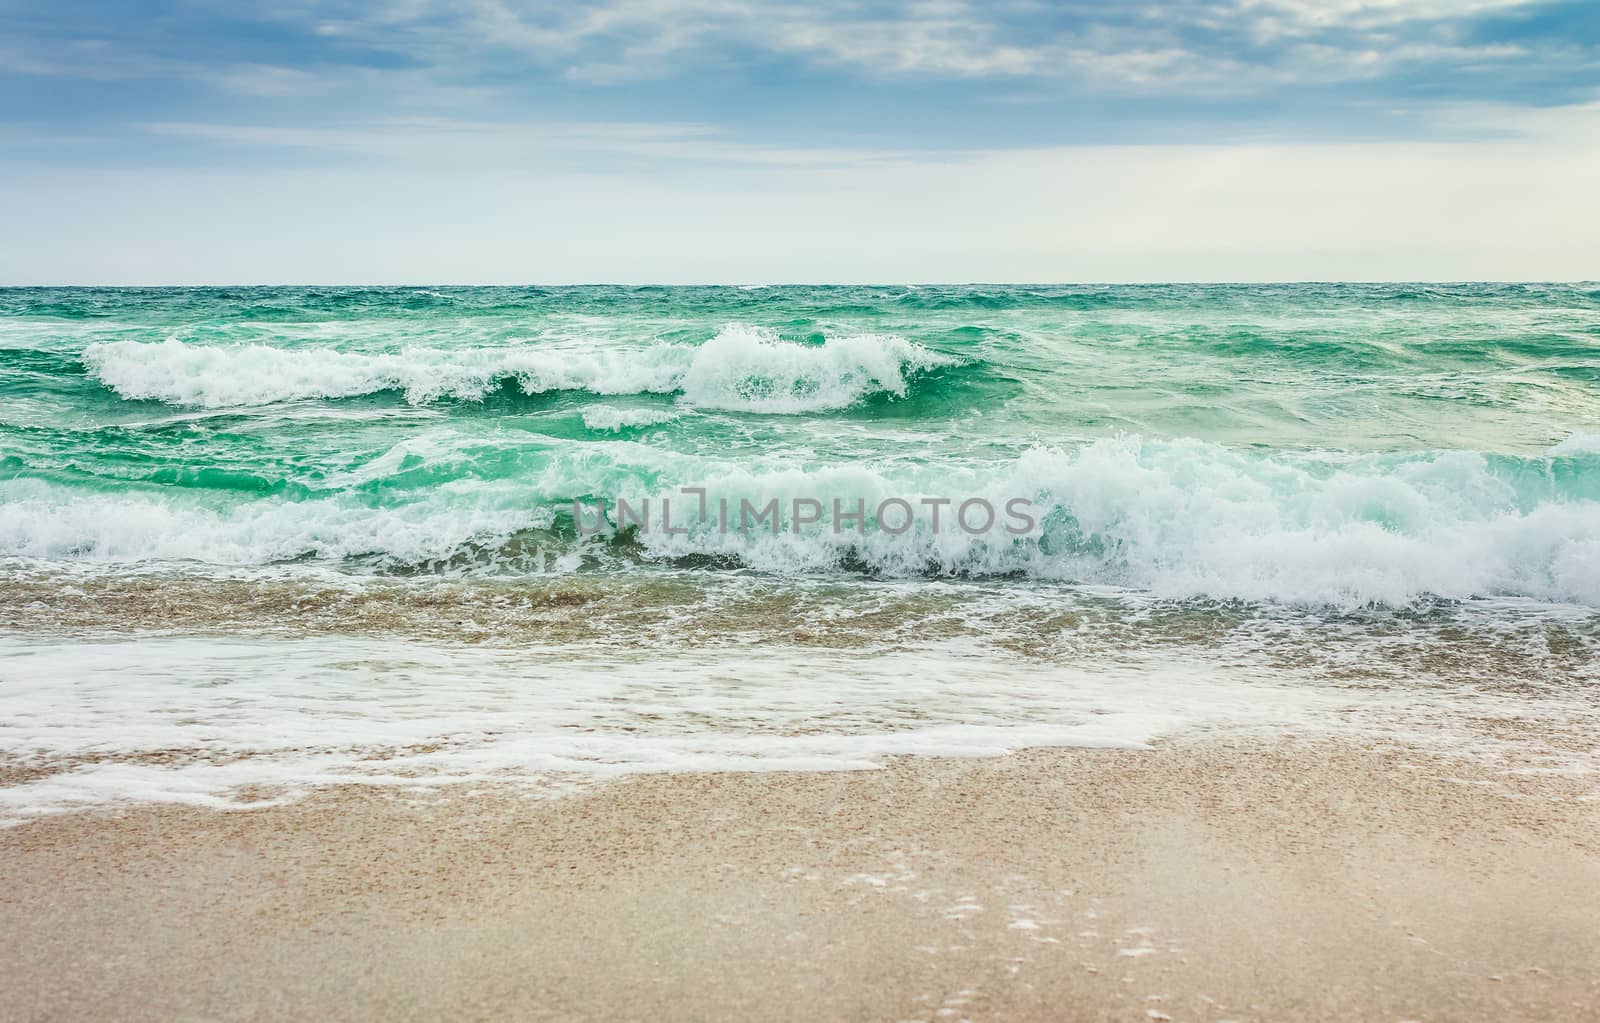 crushing waves on sandy beach by Pellinni